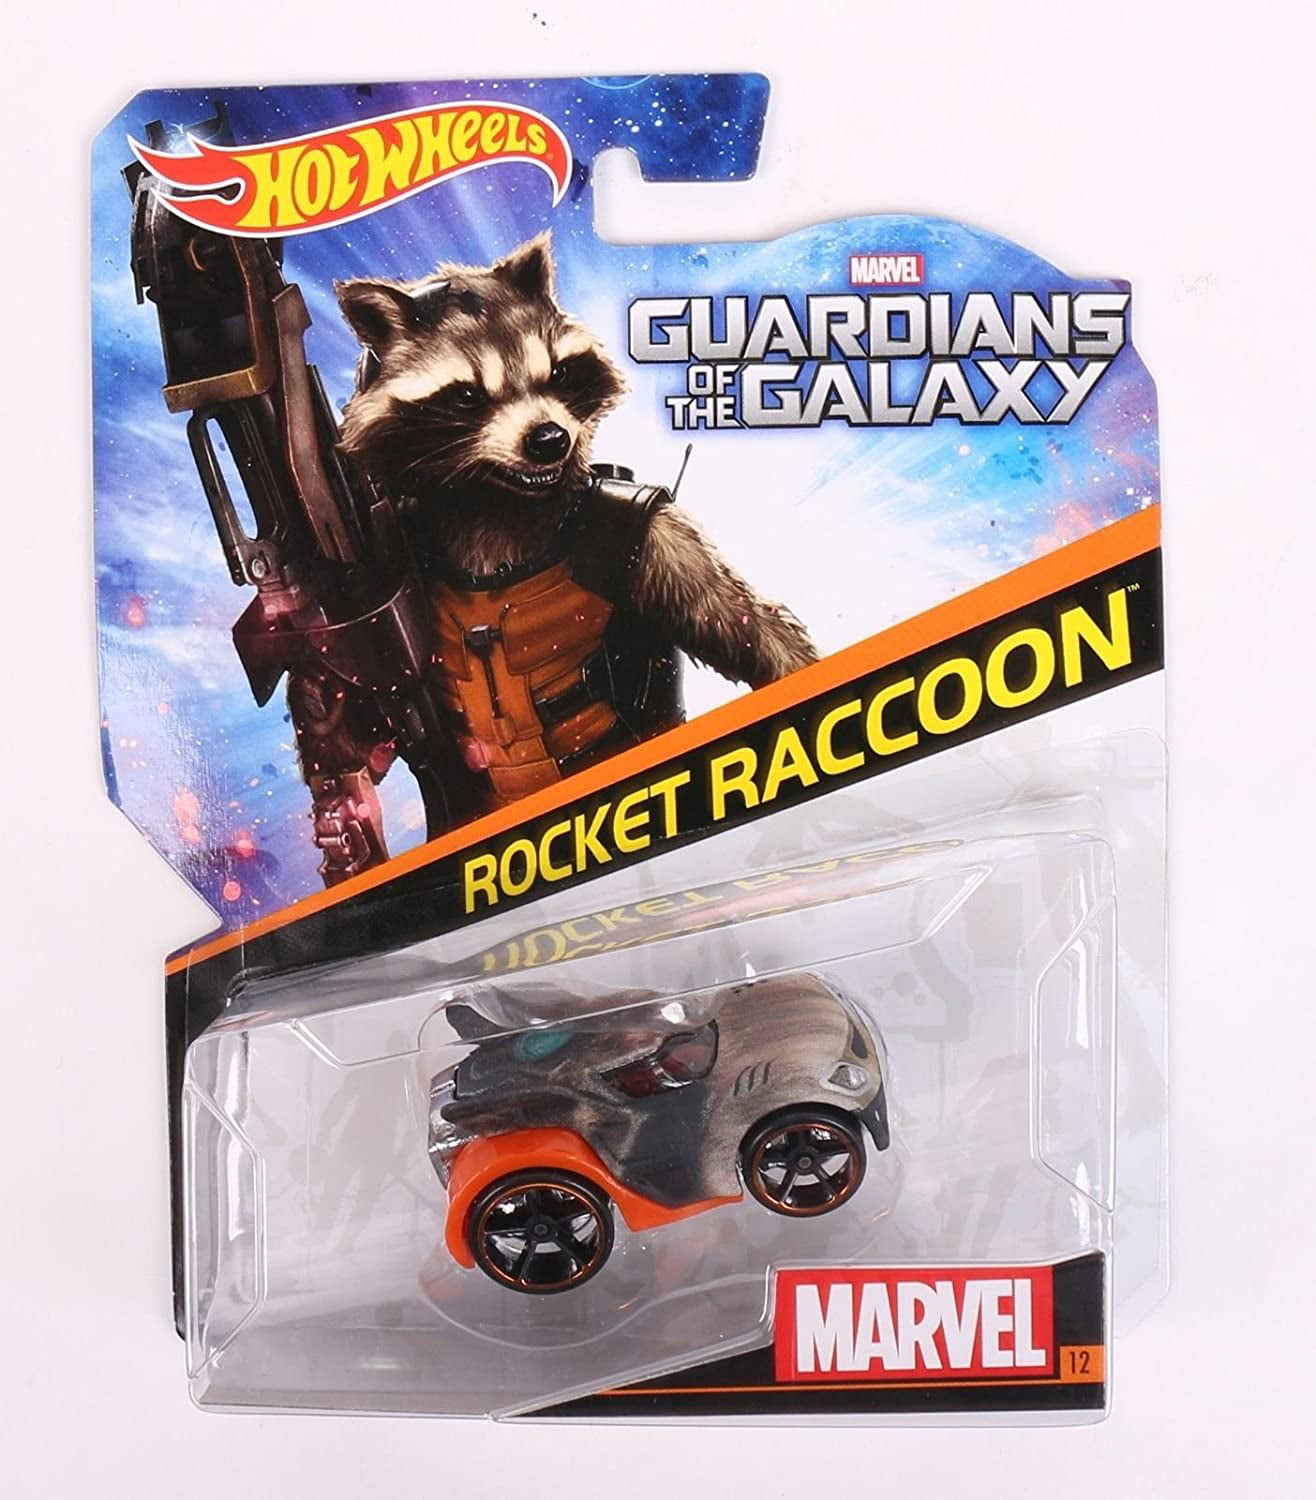 Marvel Heroes 3D Rocket Raccoon figurine 1:16 